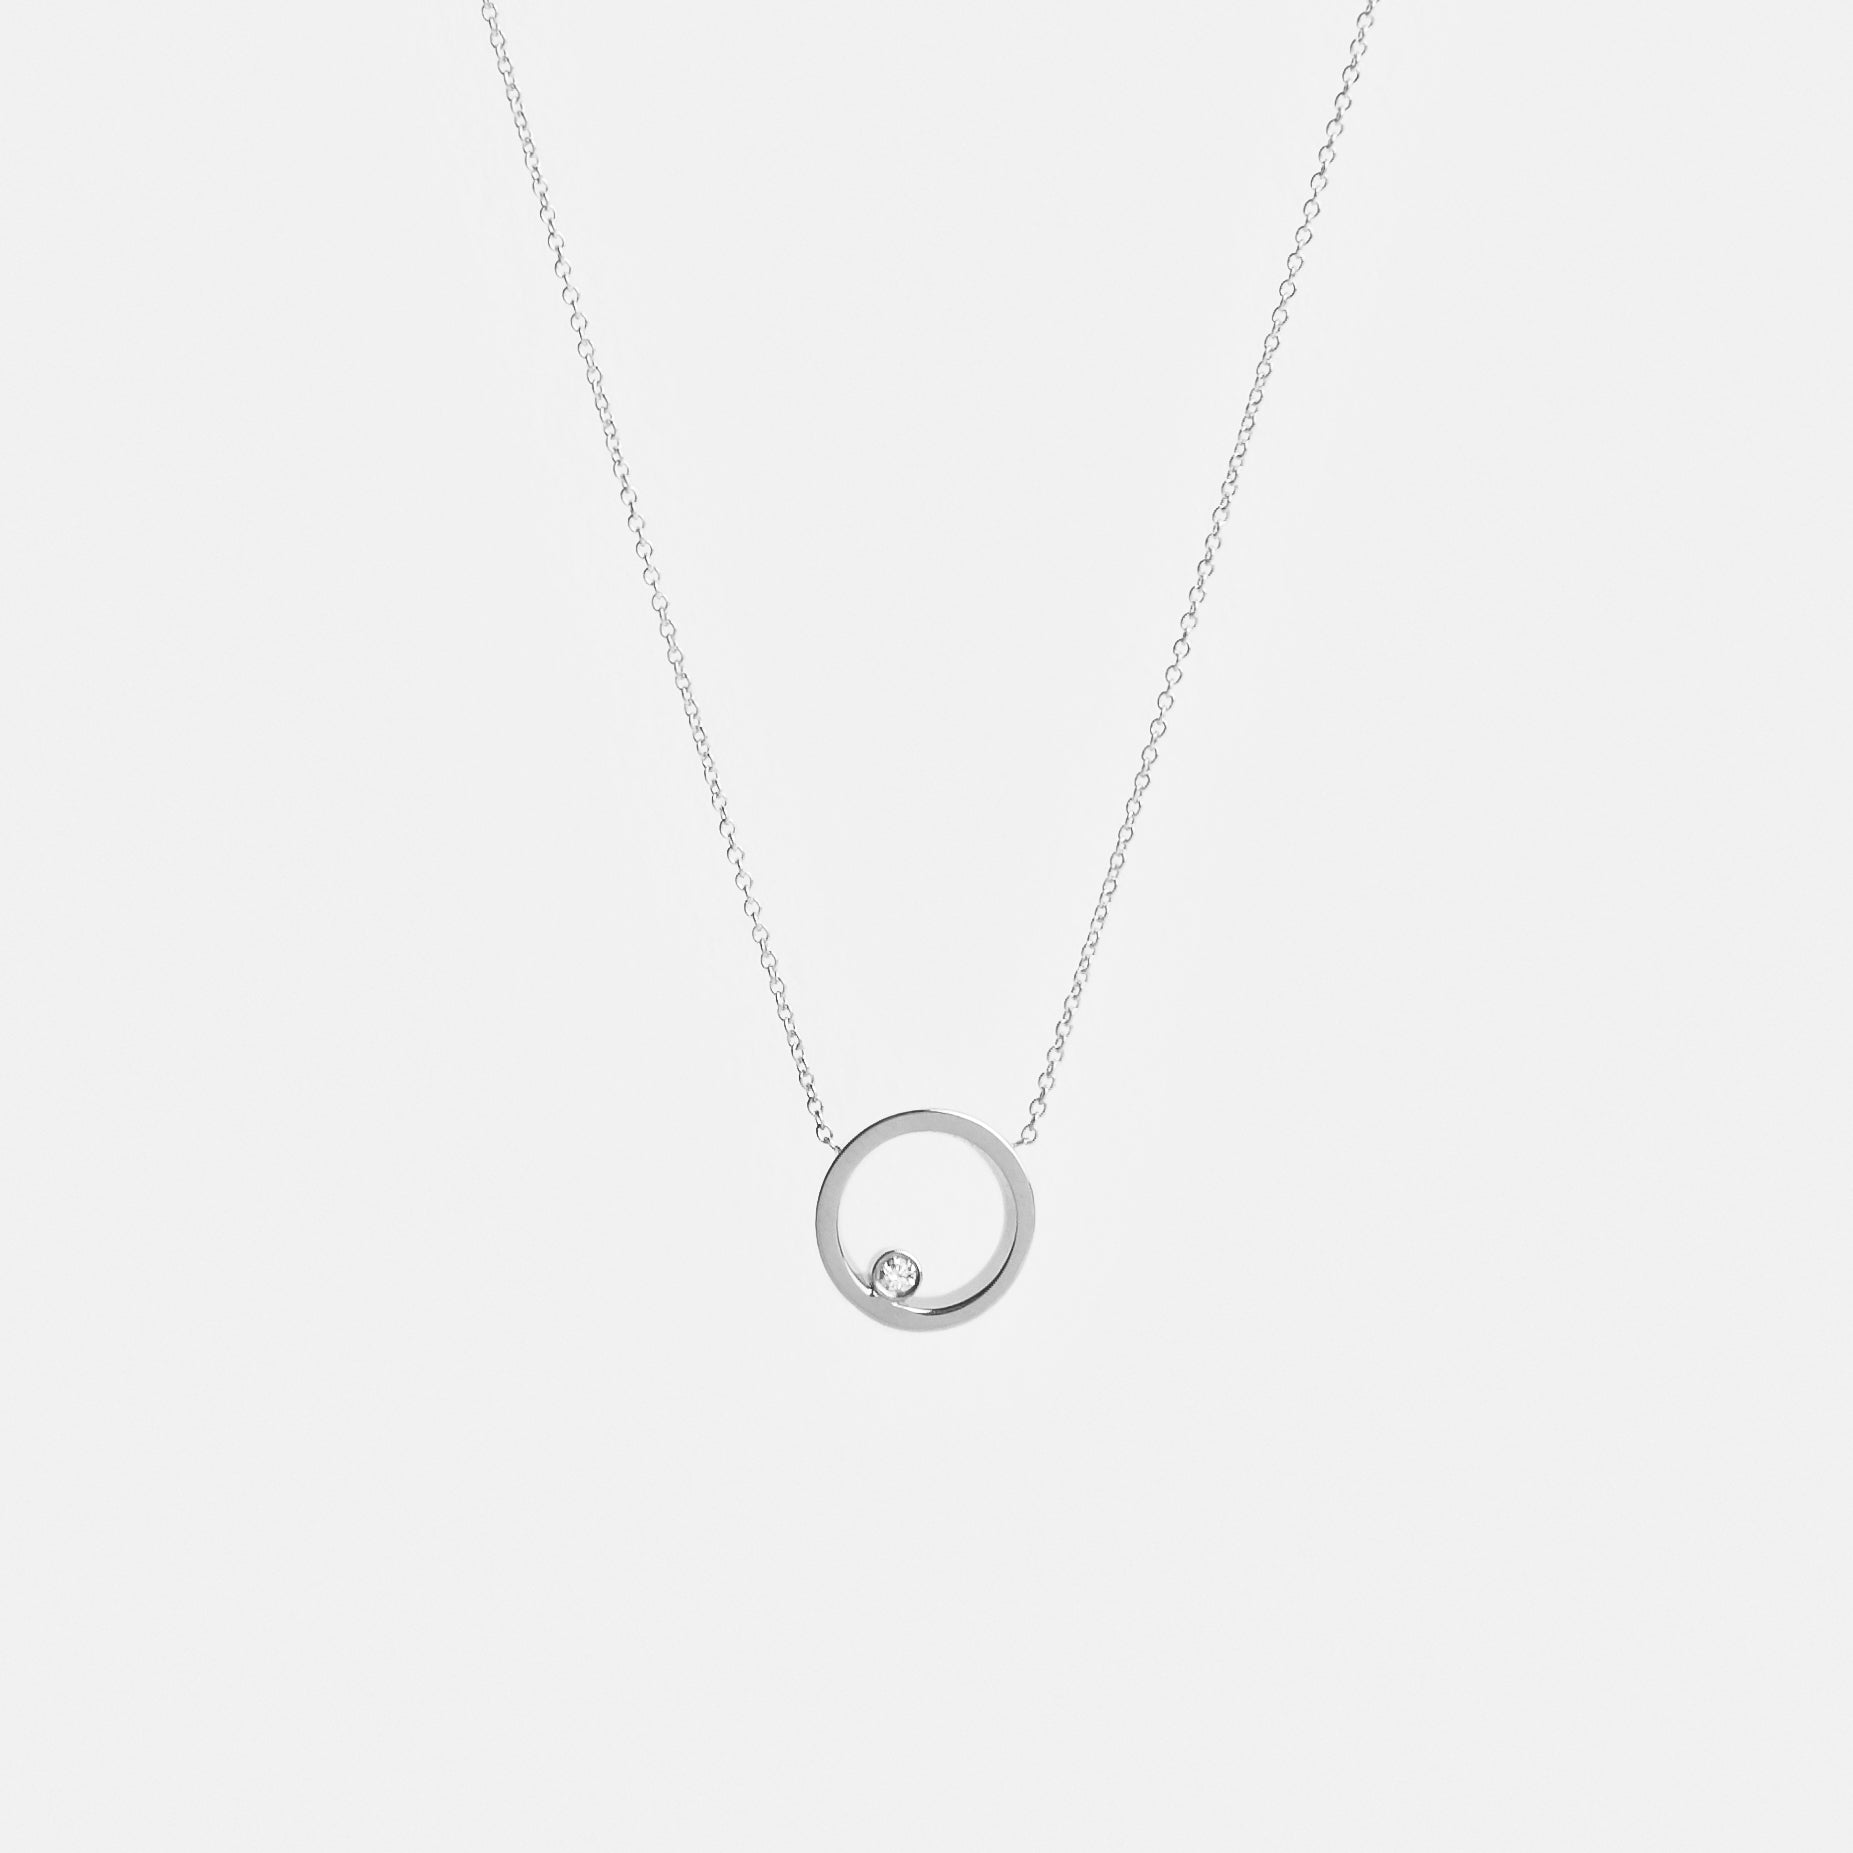 Ila Minimal Necklace in 14k White Gold set with White Diamond By SHW Fine Jewelry NYC